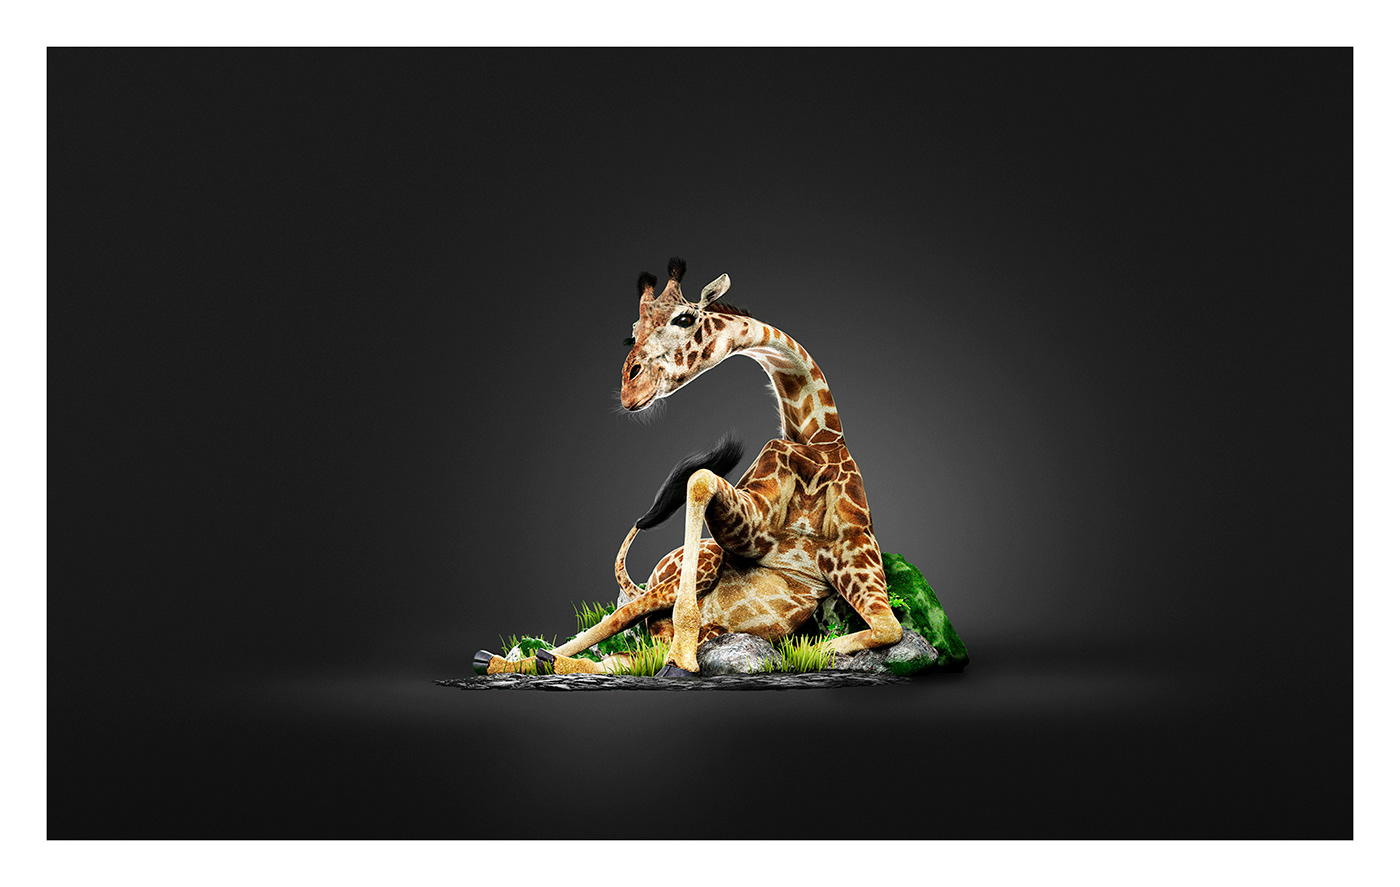 3D Advertising  affichage animals campagne communication girafe publicité zoo